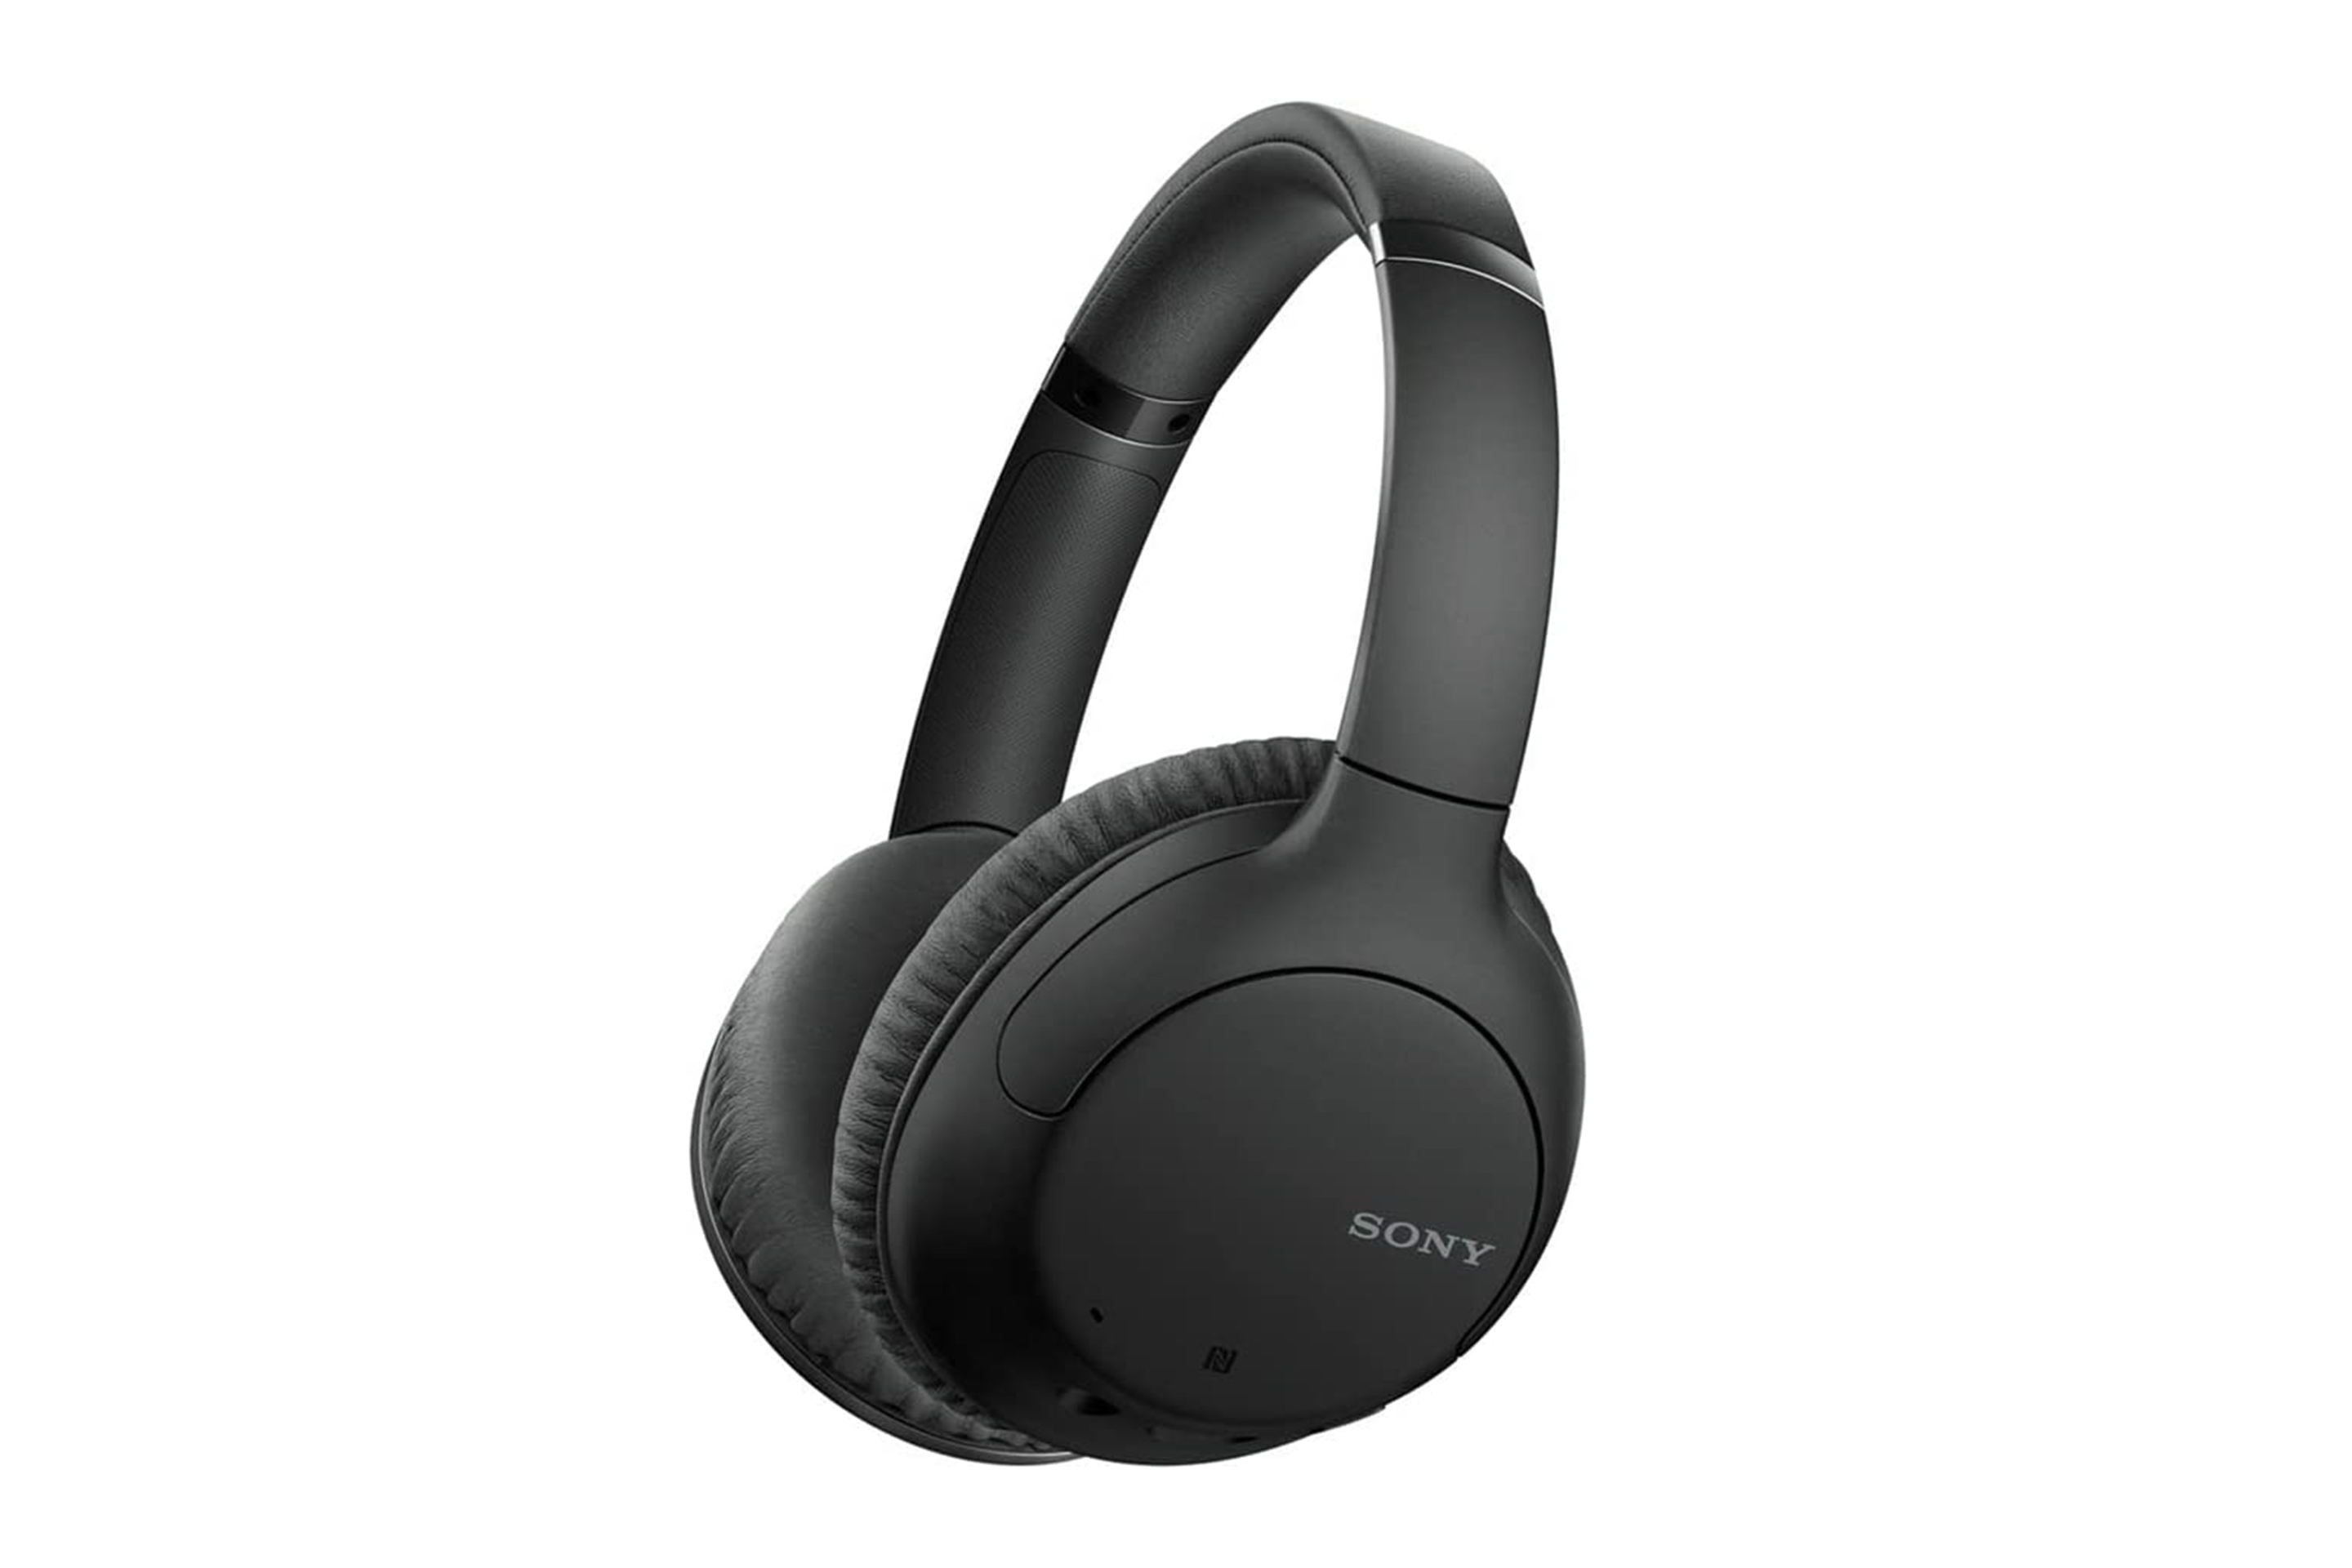 Sony Model WHCH710N Wireless Headphones